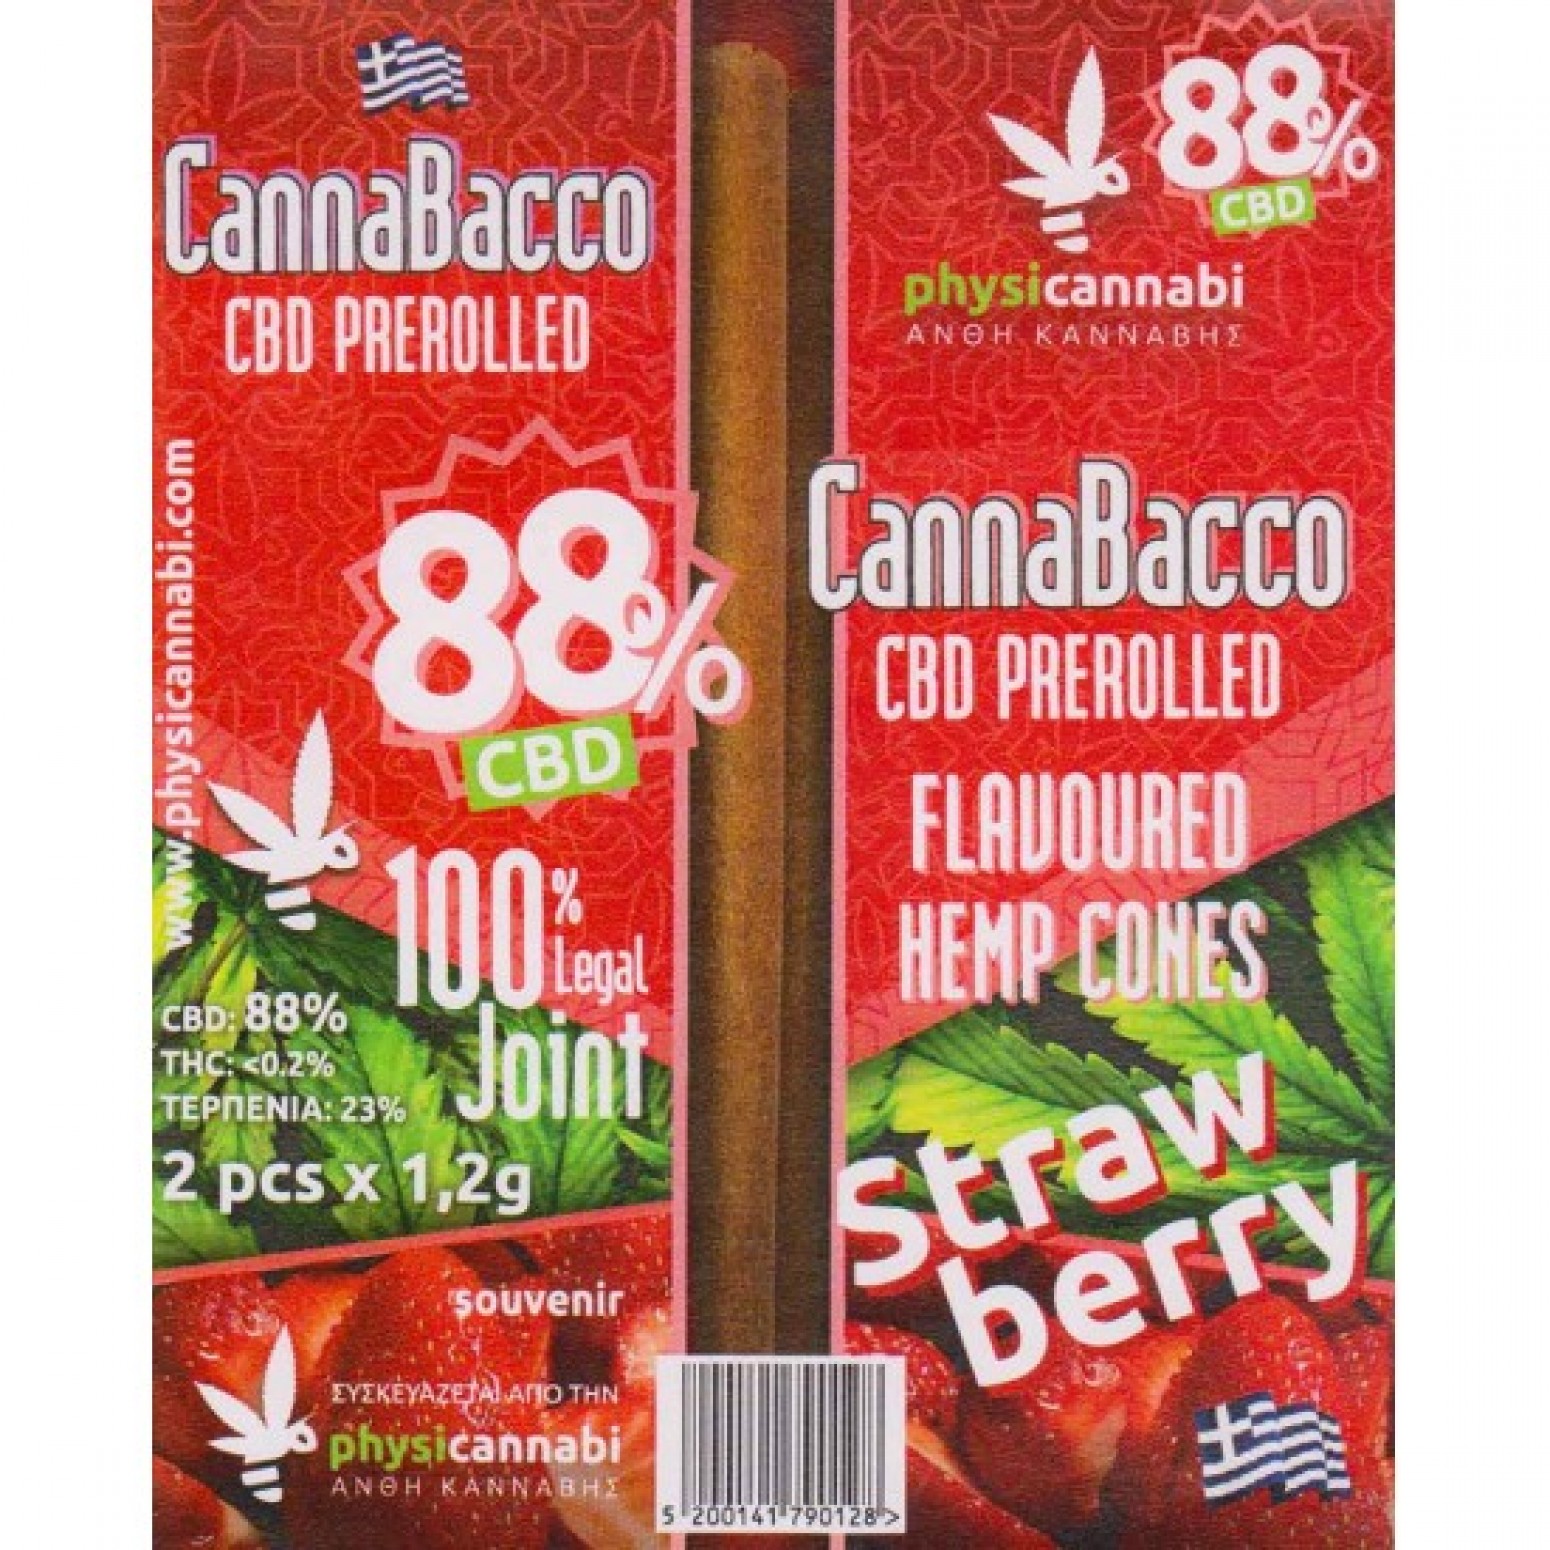 CANNABACCO - CBD PREROLLED FLAVOURED HEMP CONES  Strawberry